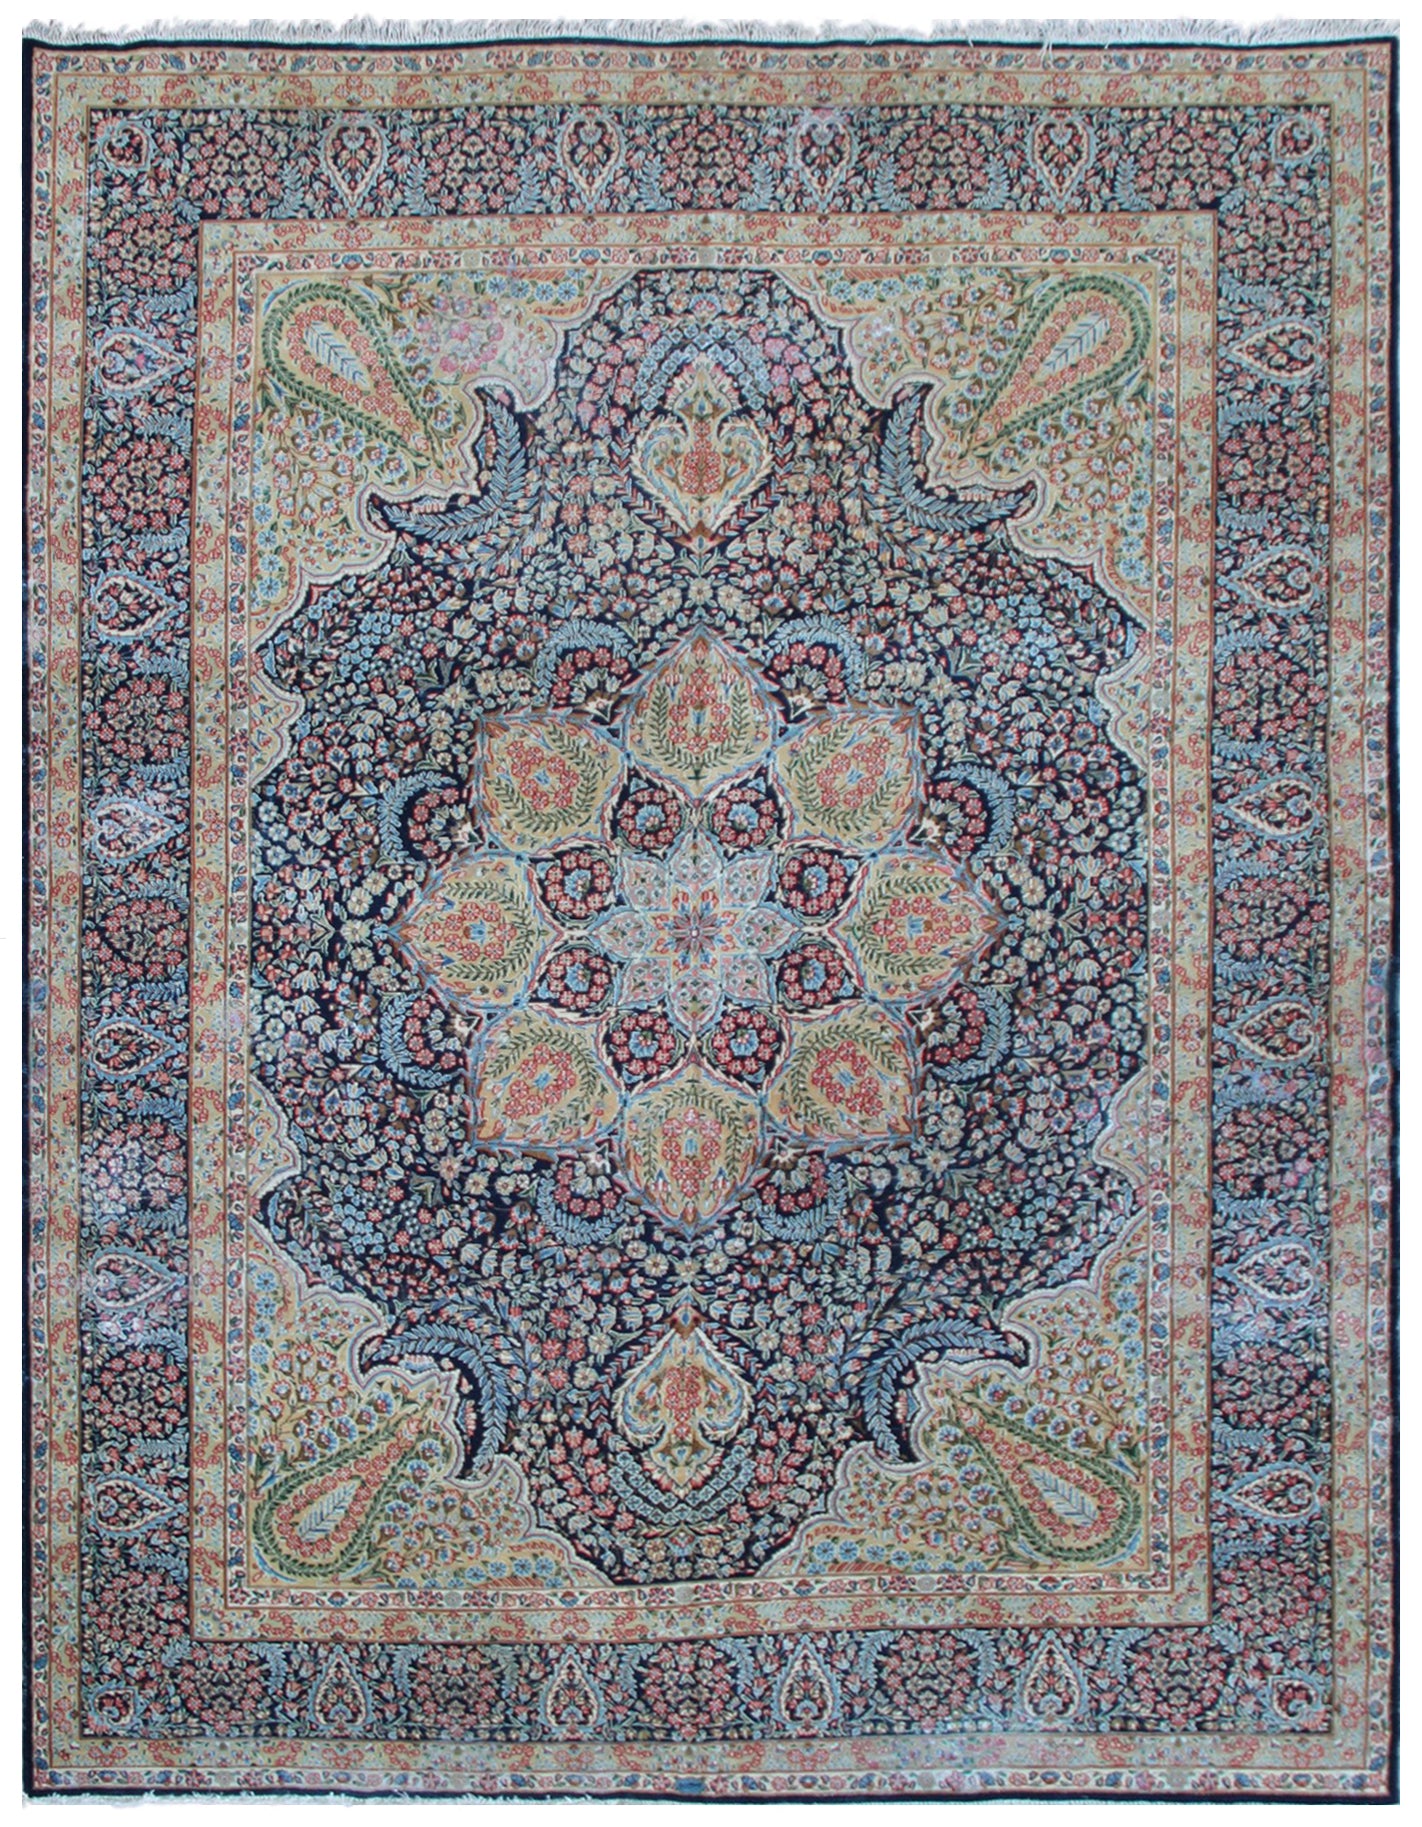 9'x12' Vintage Persian Kirman Antique Semi-Antique rug